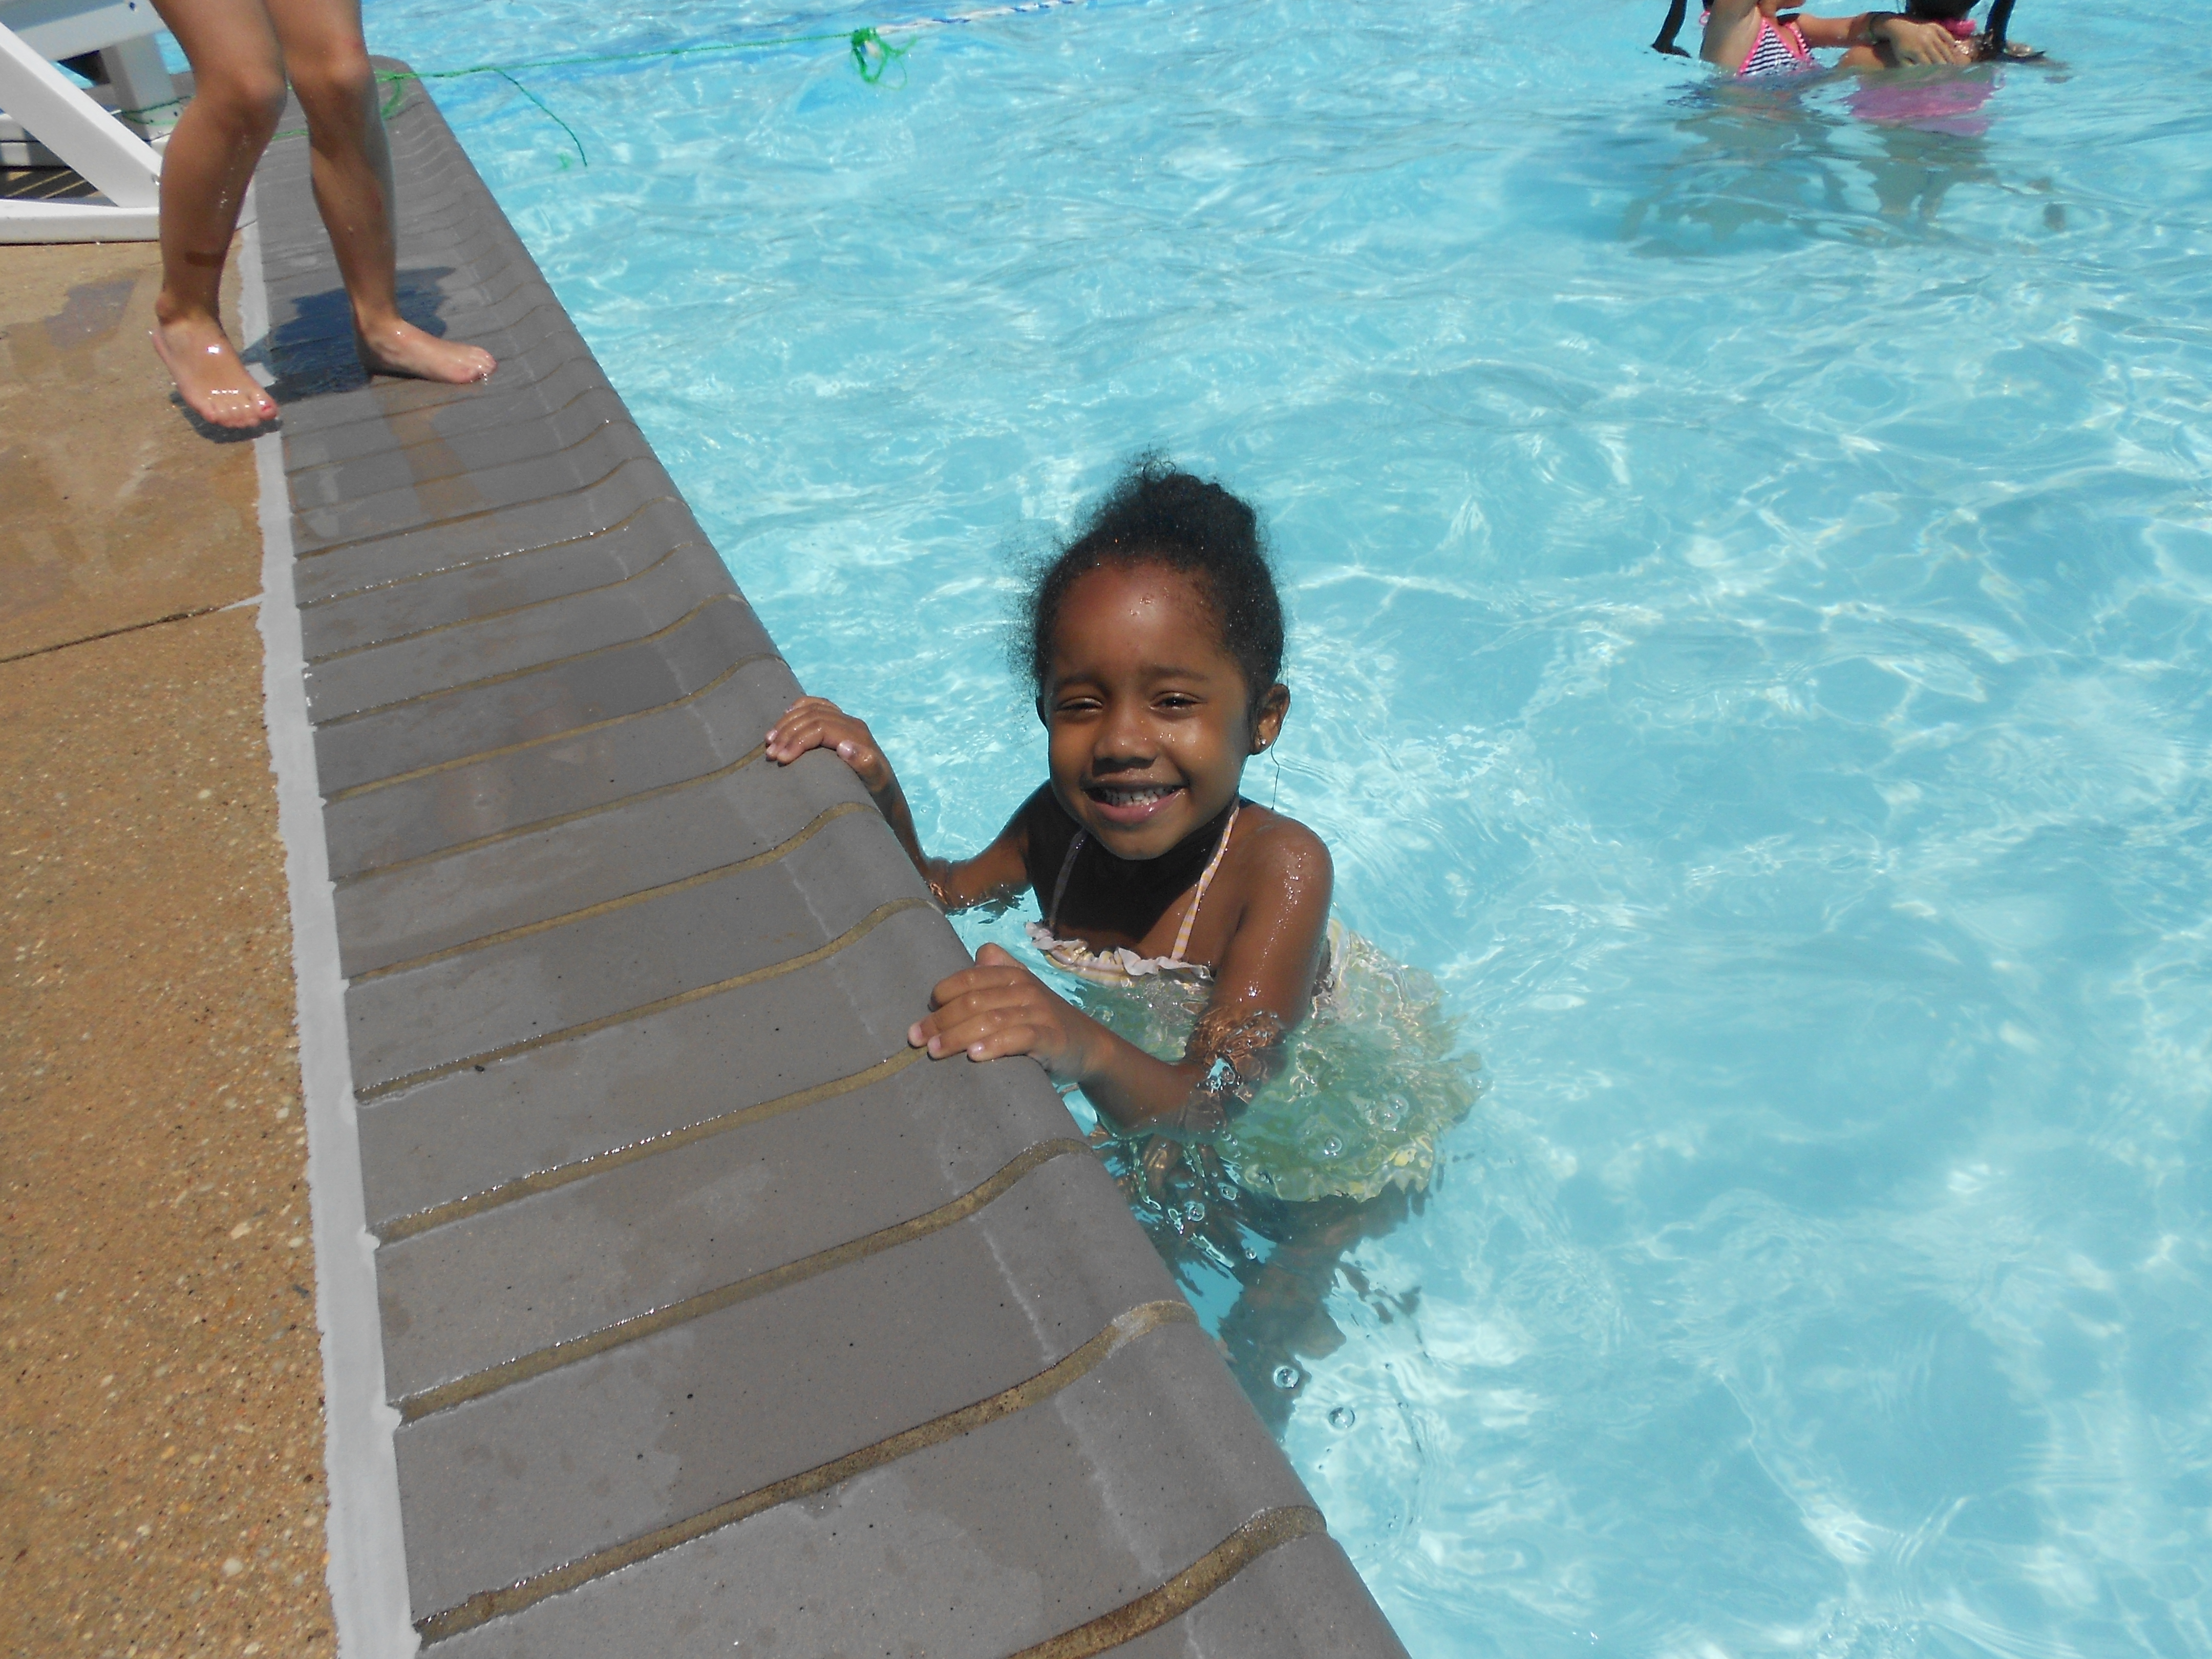 Mabari's daughter in a pool